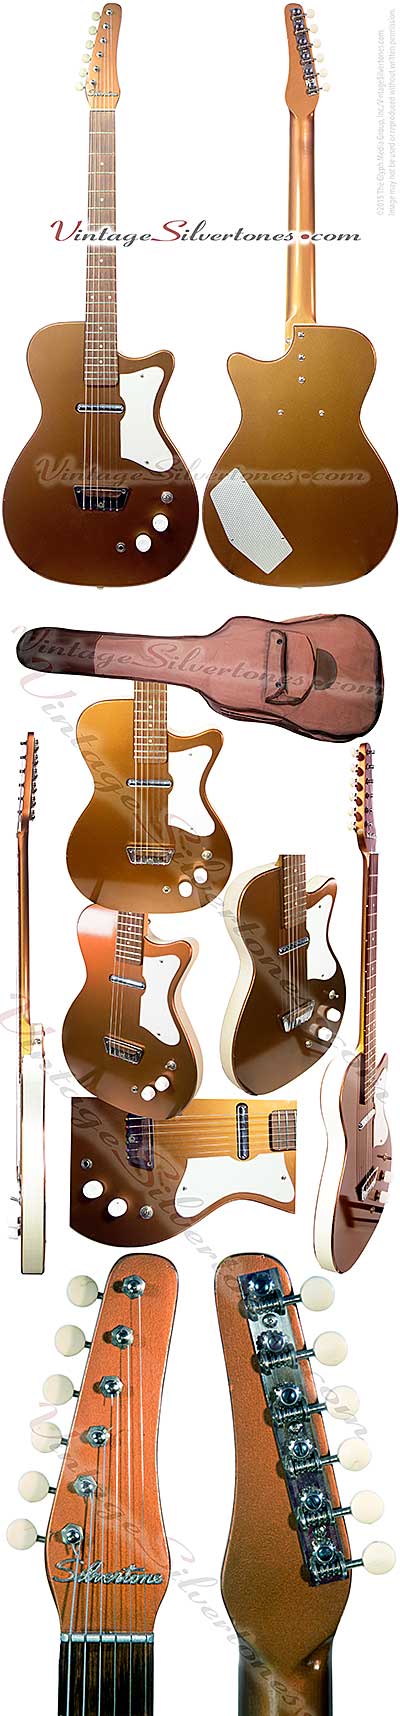 Silvertone 1415-Danelectro-made 1 pickup, electric guitar, dolphin, 1960, bronze